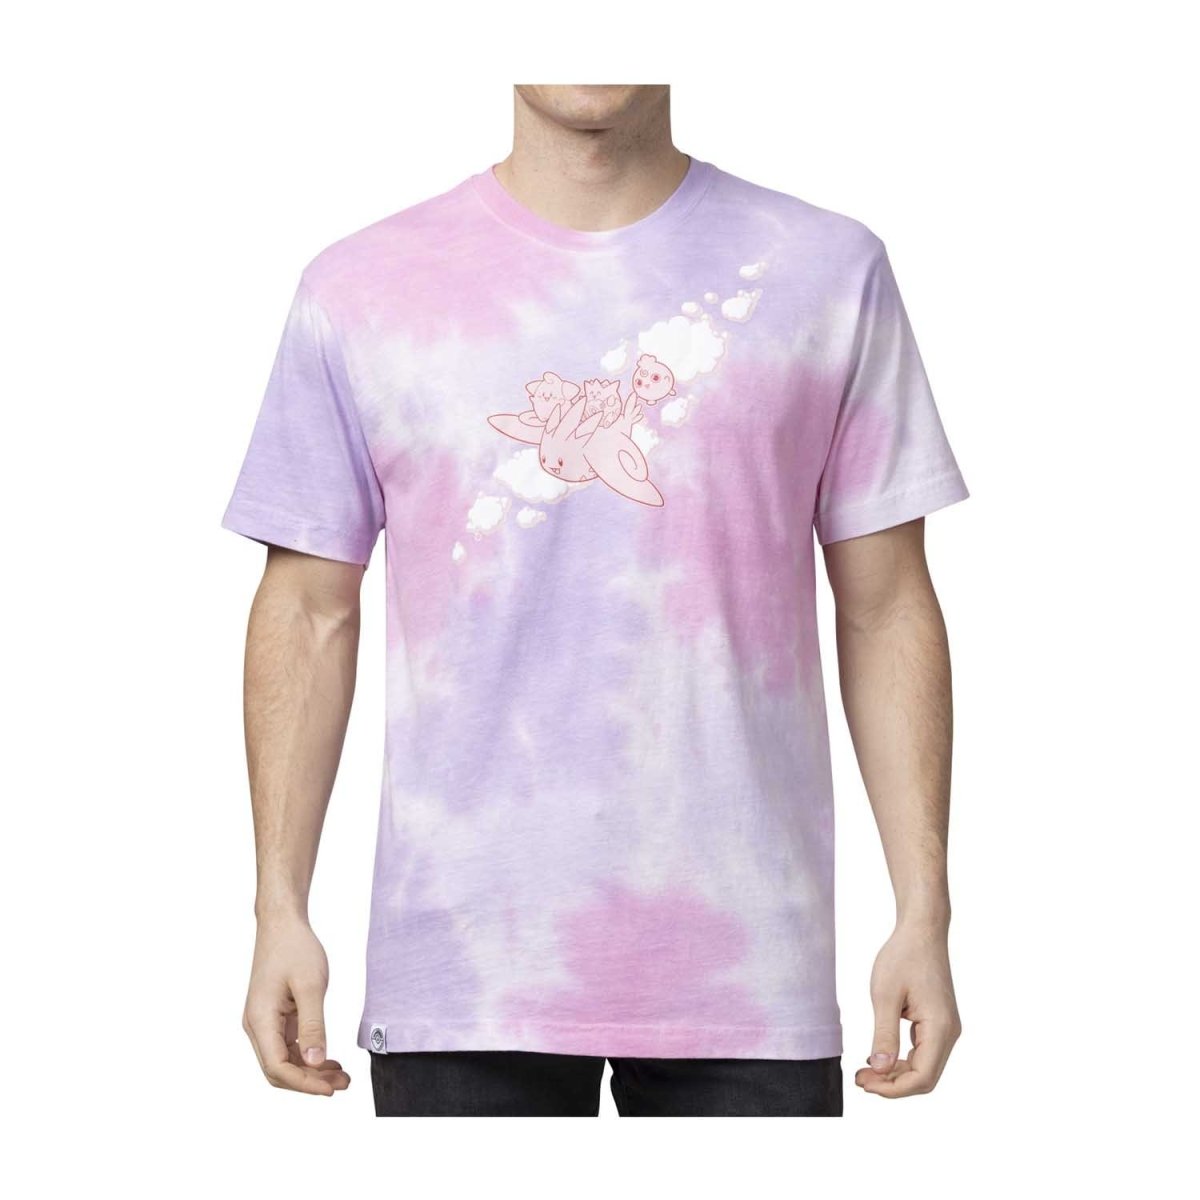 Pink Tie Dye Shirt -  Canada